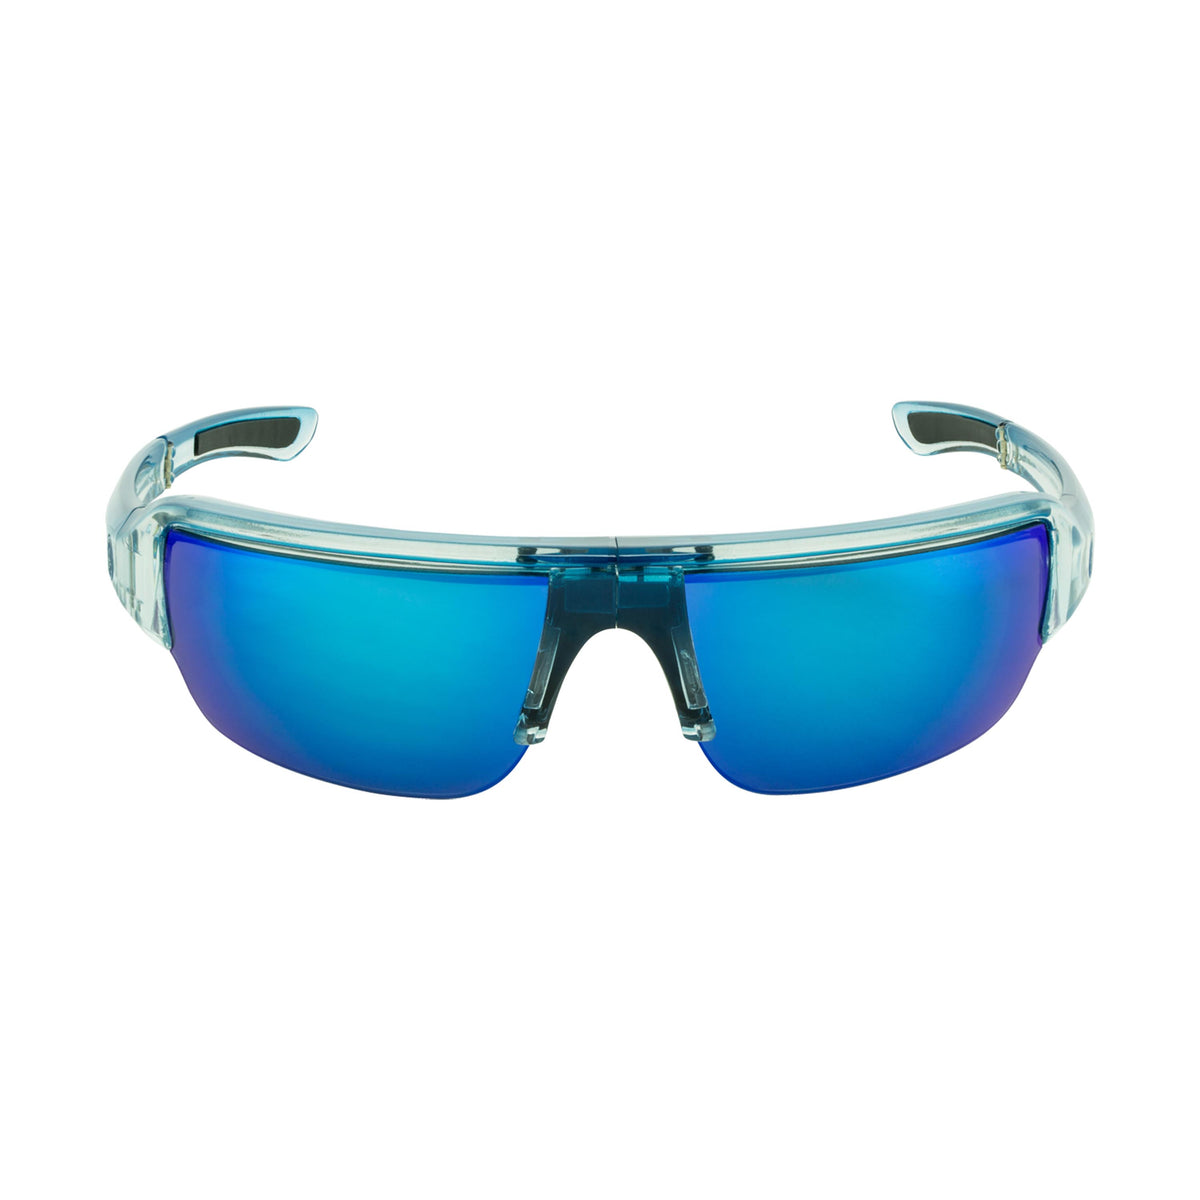 Popticals, Premium Compact Sunglasses, PopGun, 030010-BFUN, Polarized Sunglasses, Gloss Blue/Clear Crystal Frame, Gray Lenses w/Blue Mirror Finish, Front View